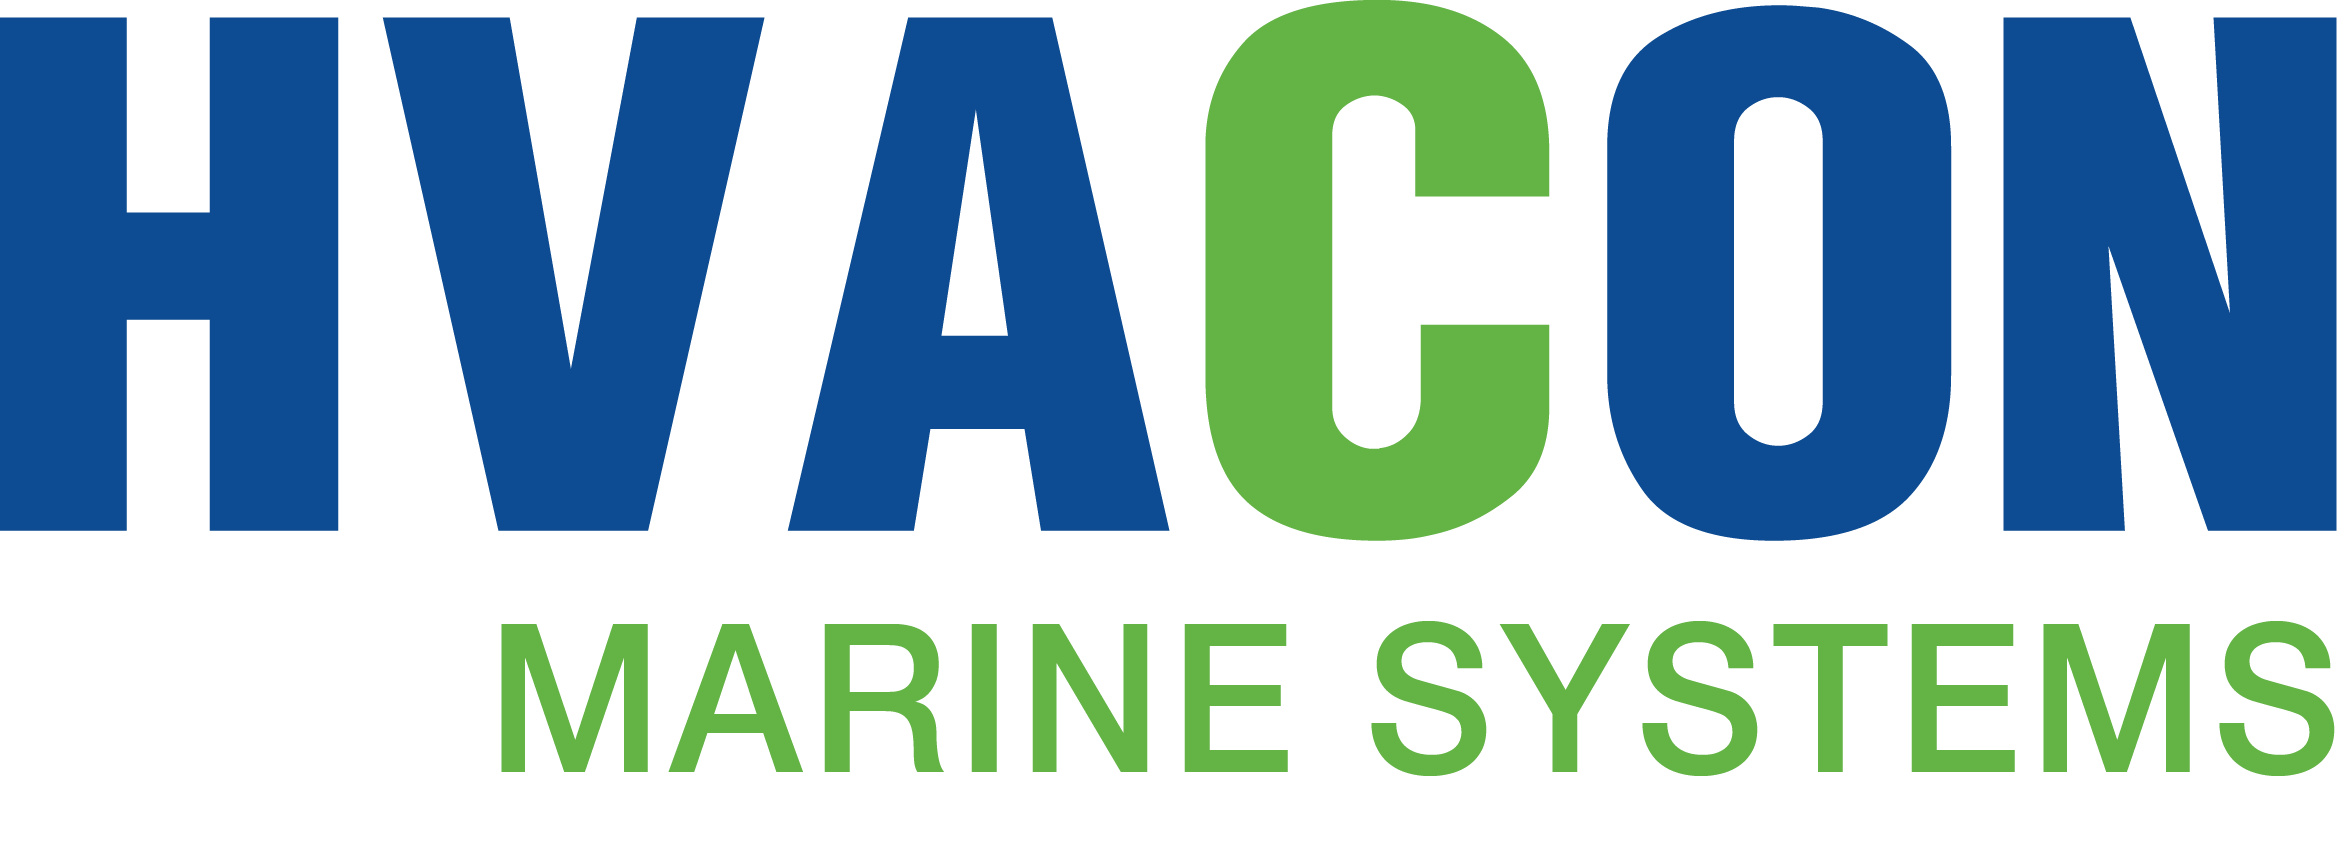 HVACON Marine Systems